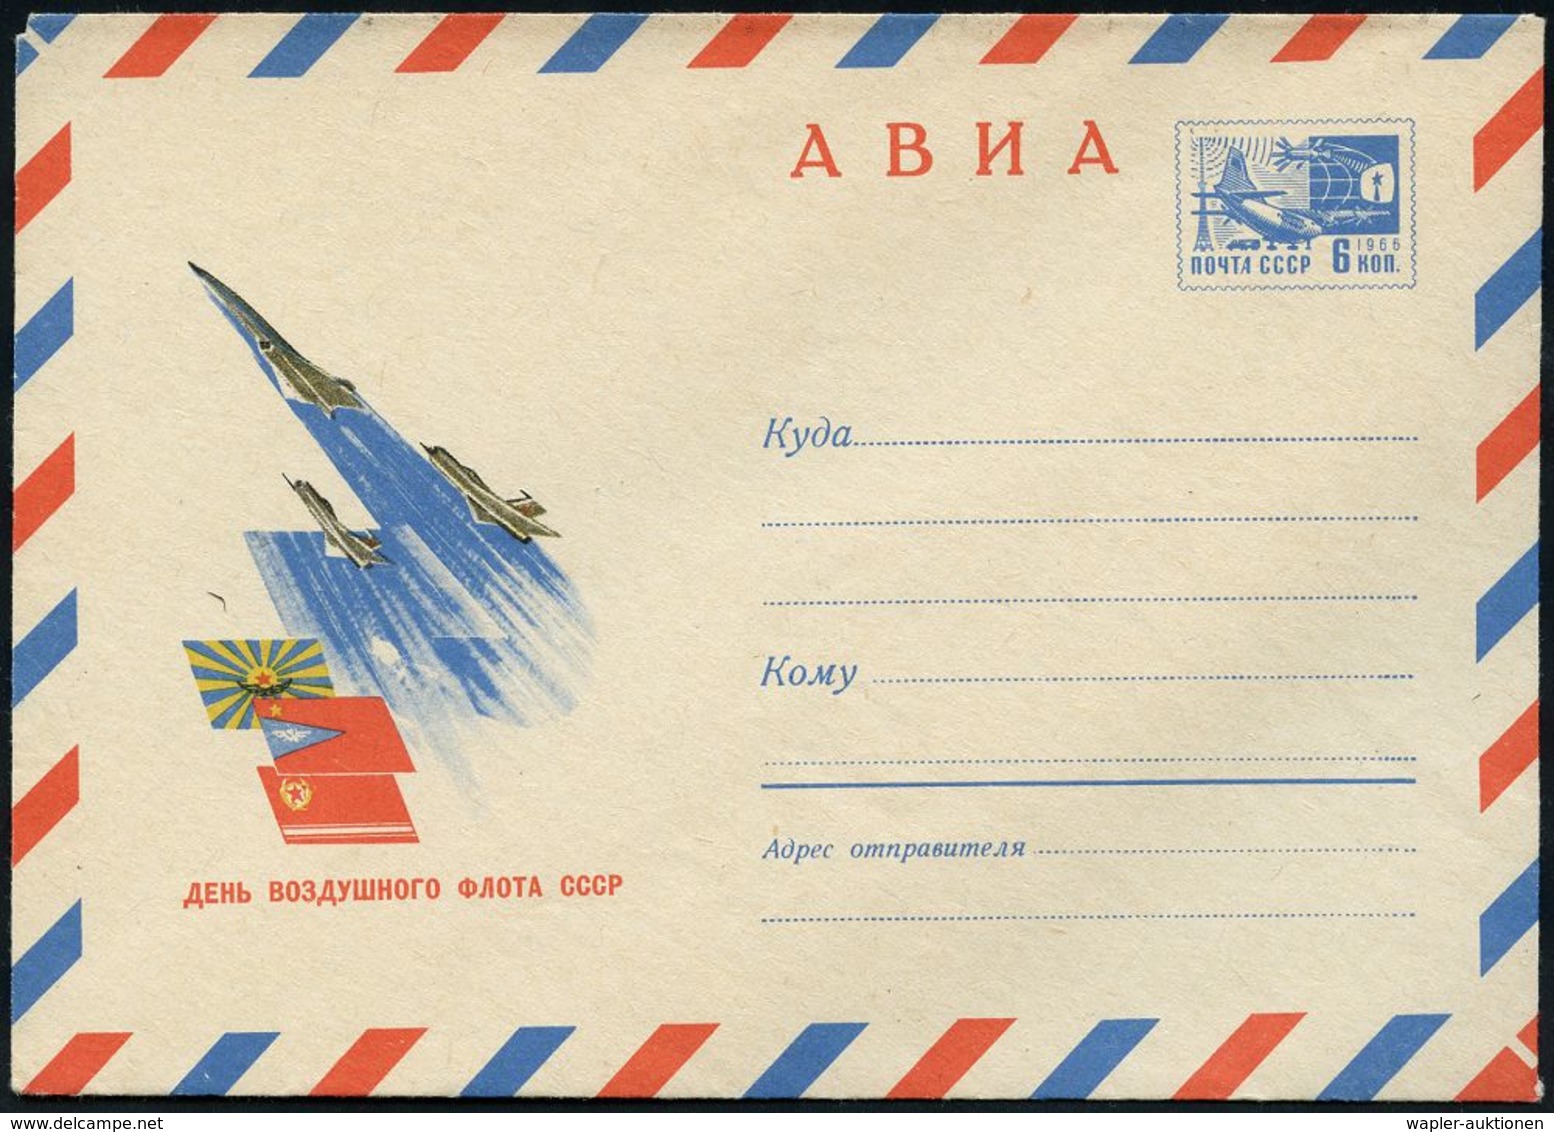 MILITÄRFLUGWESEN / MILITÄRFLUGZEUGE : UdSSR 1969 6 Kop. LU Luft- U. Raumfahrt, Blau: Tag Der Sowjet. Luftflotte = Übersc - Avions